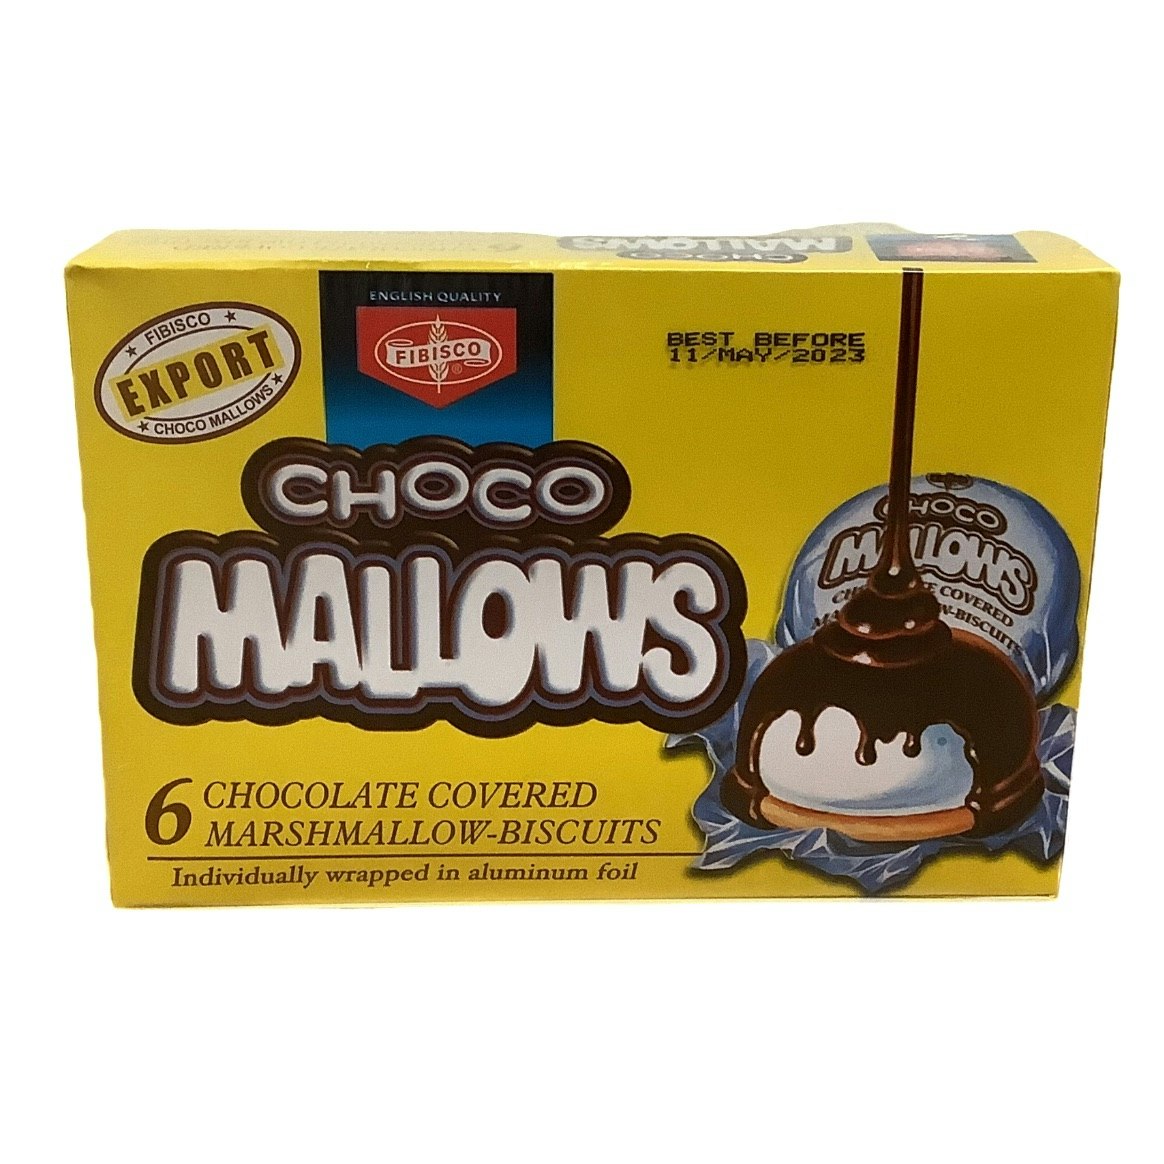 Fibisco CHOCO MALLOWS 100g